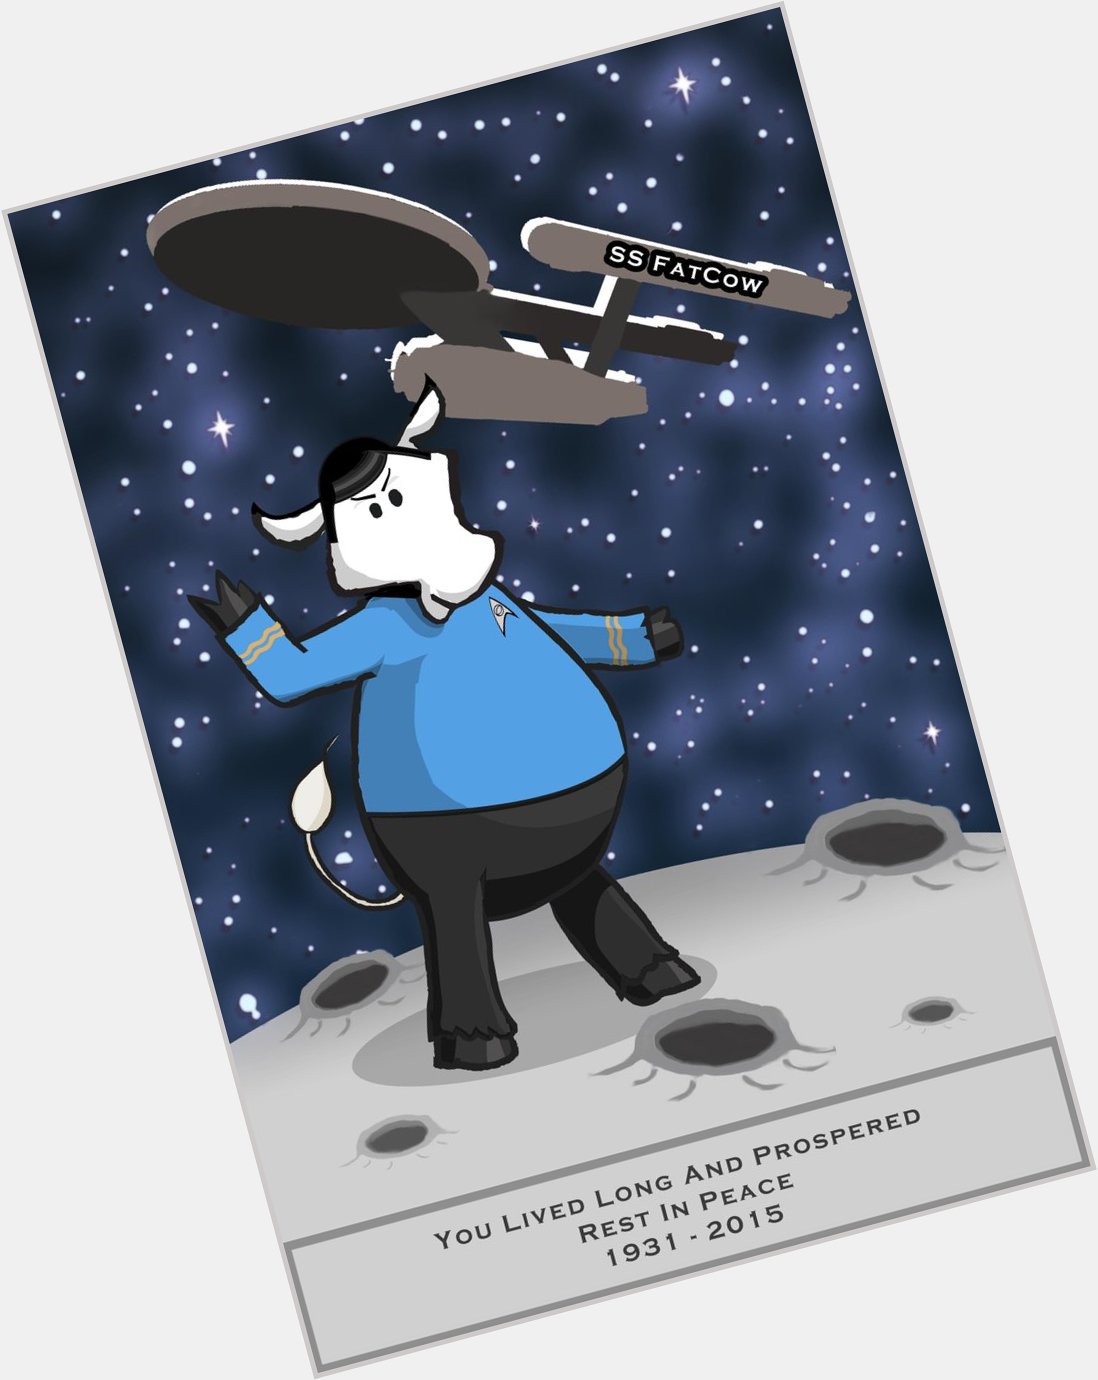 Happy Birthday Leonard Nimoy! A tribute to Mr. Spock by our Mascot Slim!  